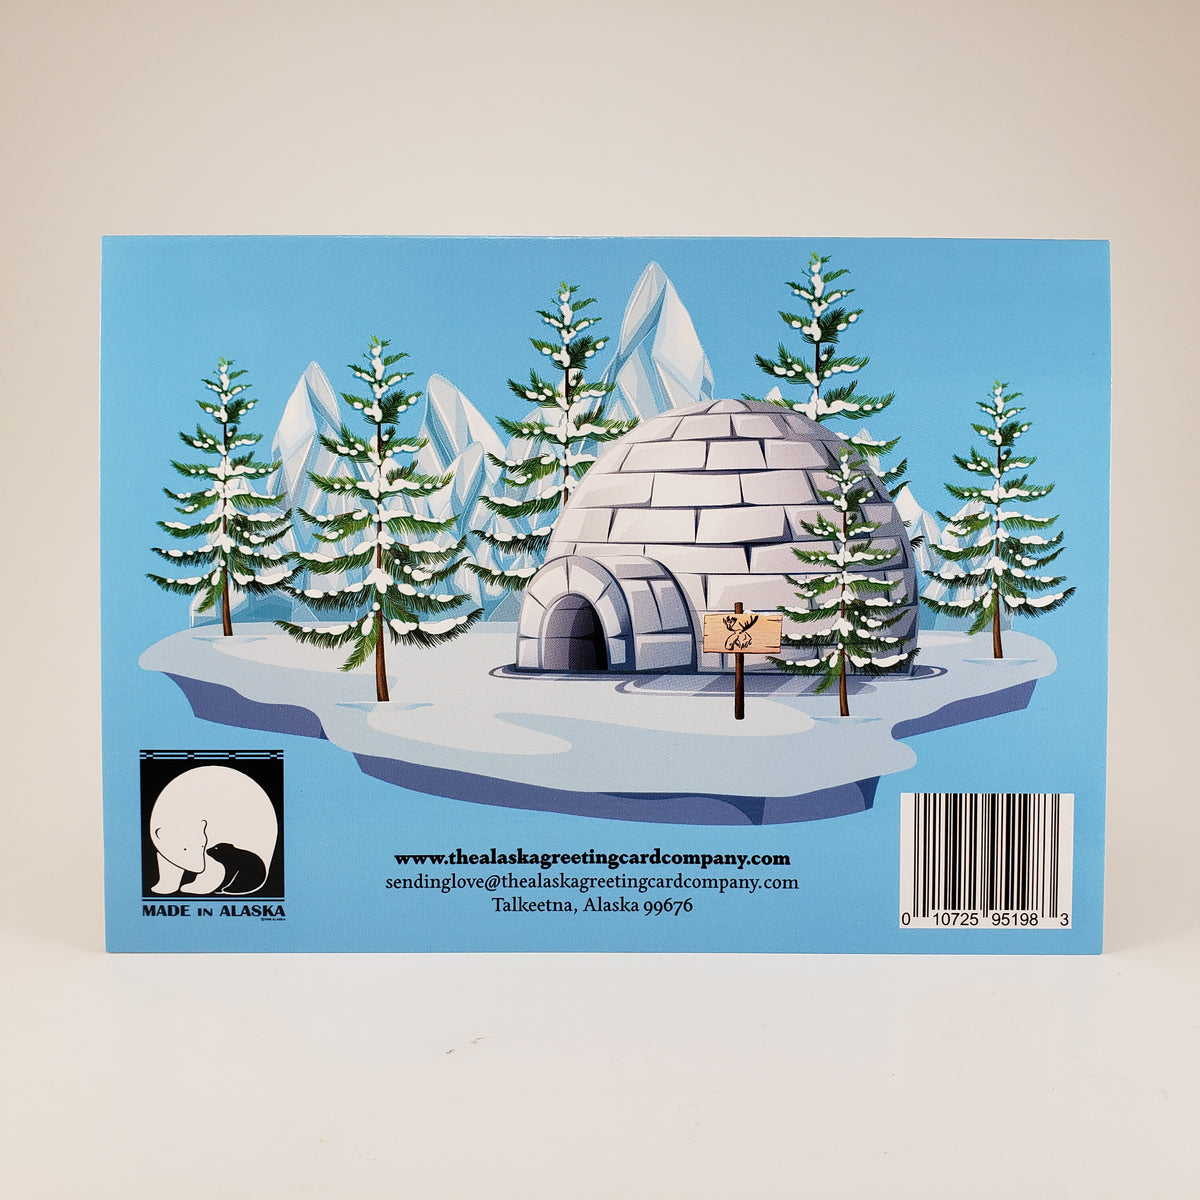 Meditating Dad – The Alaska Greeting Card Company